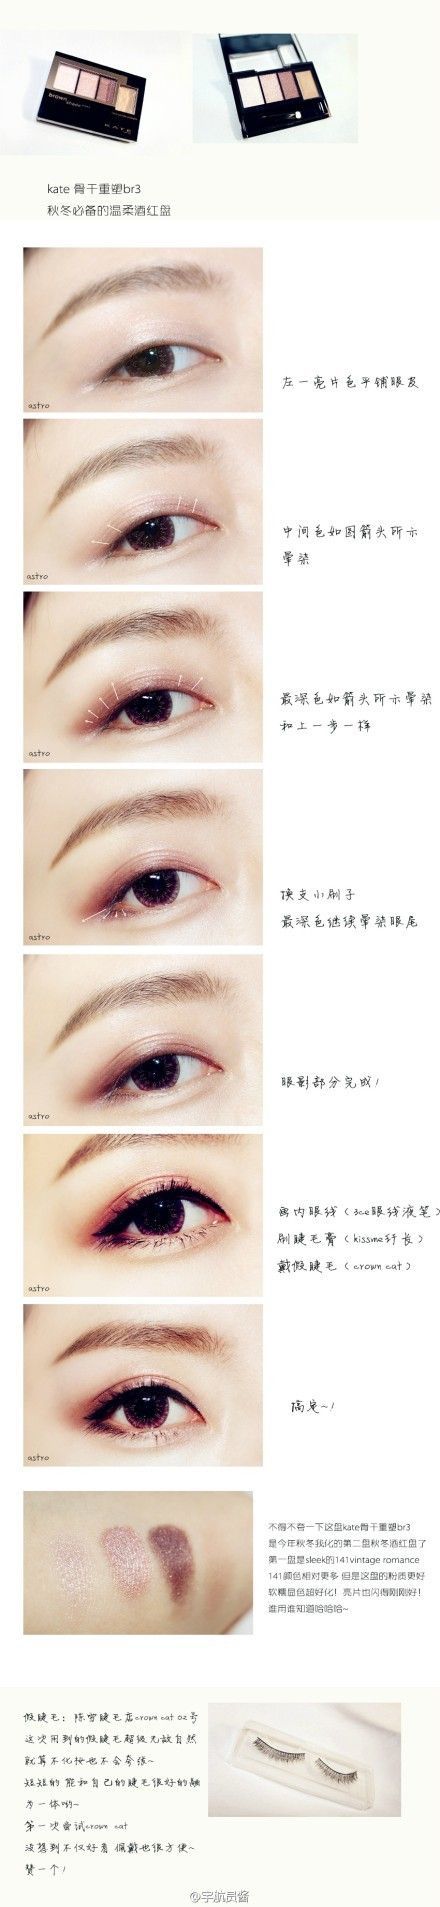 chinese-makeup-tutorial-29_7 Chinese make-up les